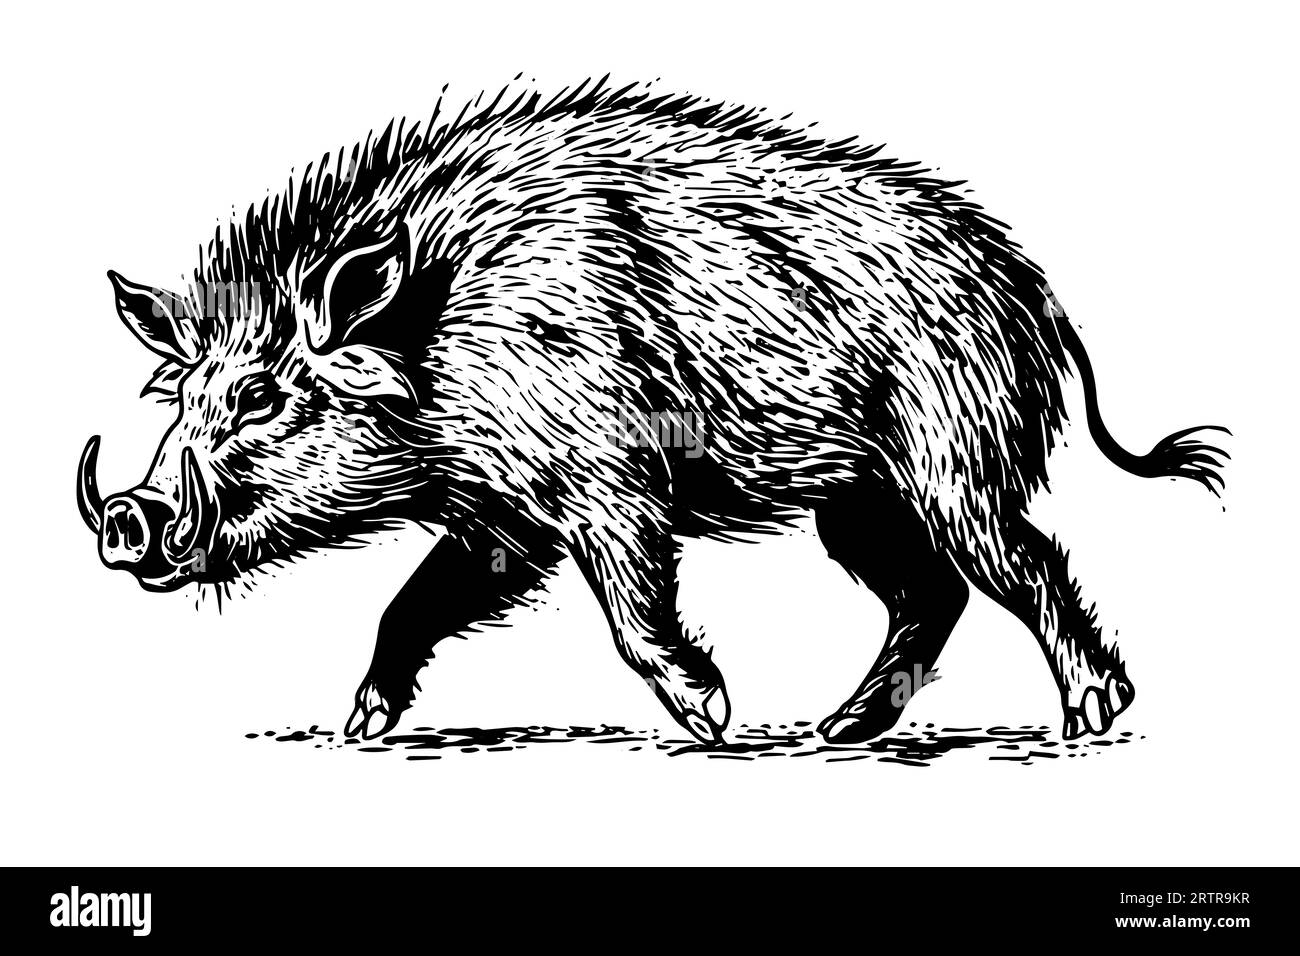 Boar or wild pig drawing ink sketch, vintage engraved style vector illustration. Stock Vector